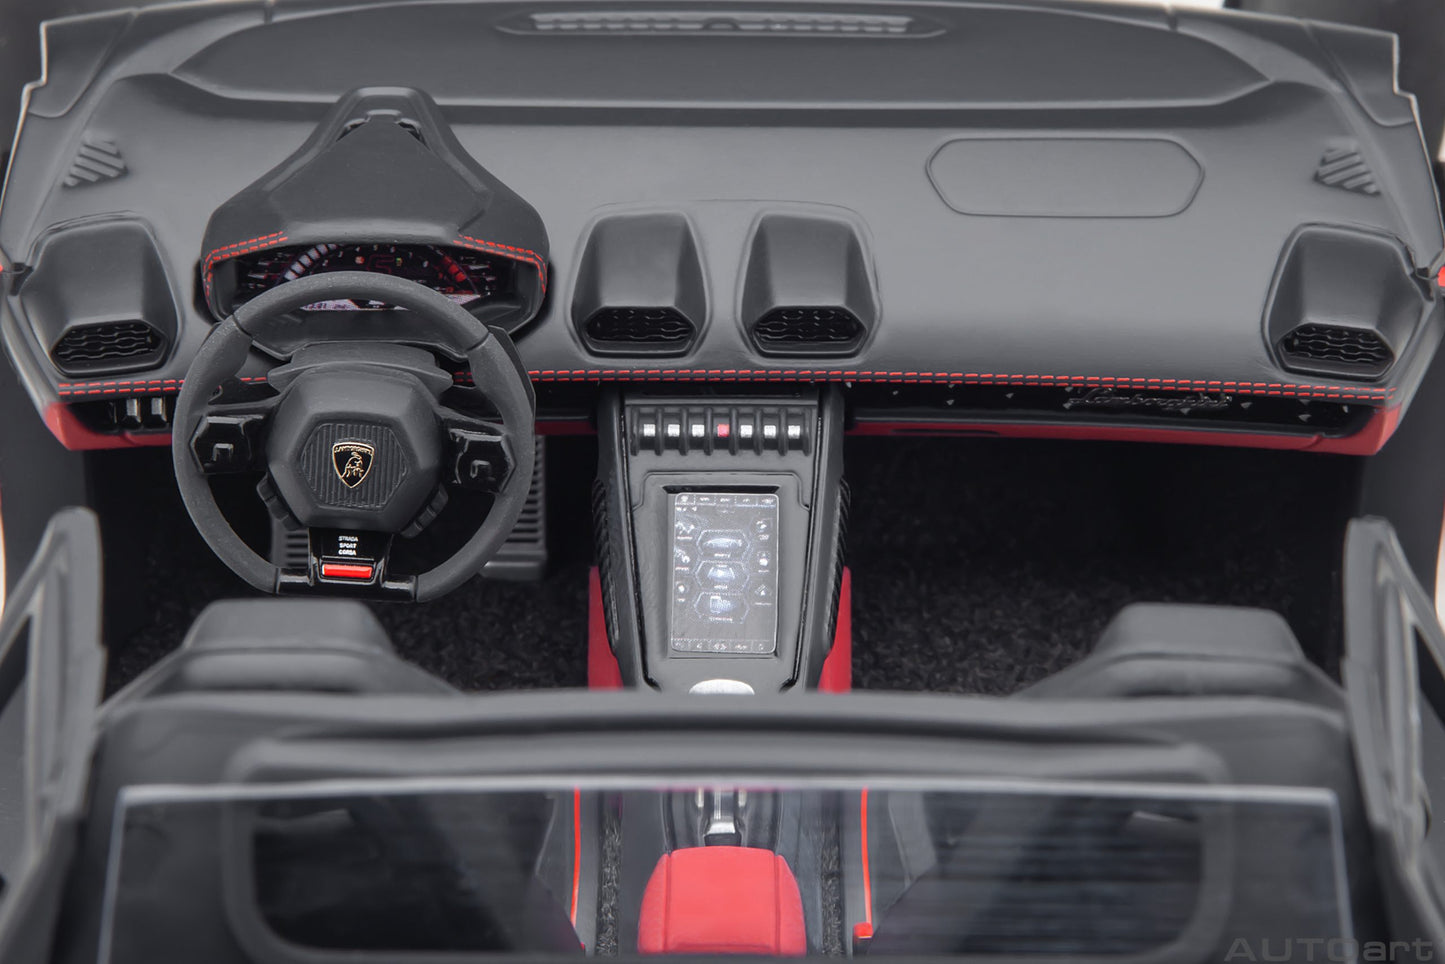 AUTOart 1:18 Lamborghini Huracan Evo (Rosso Bia) 79213